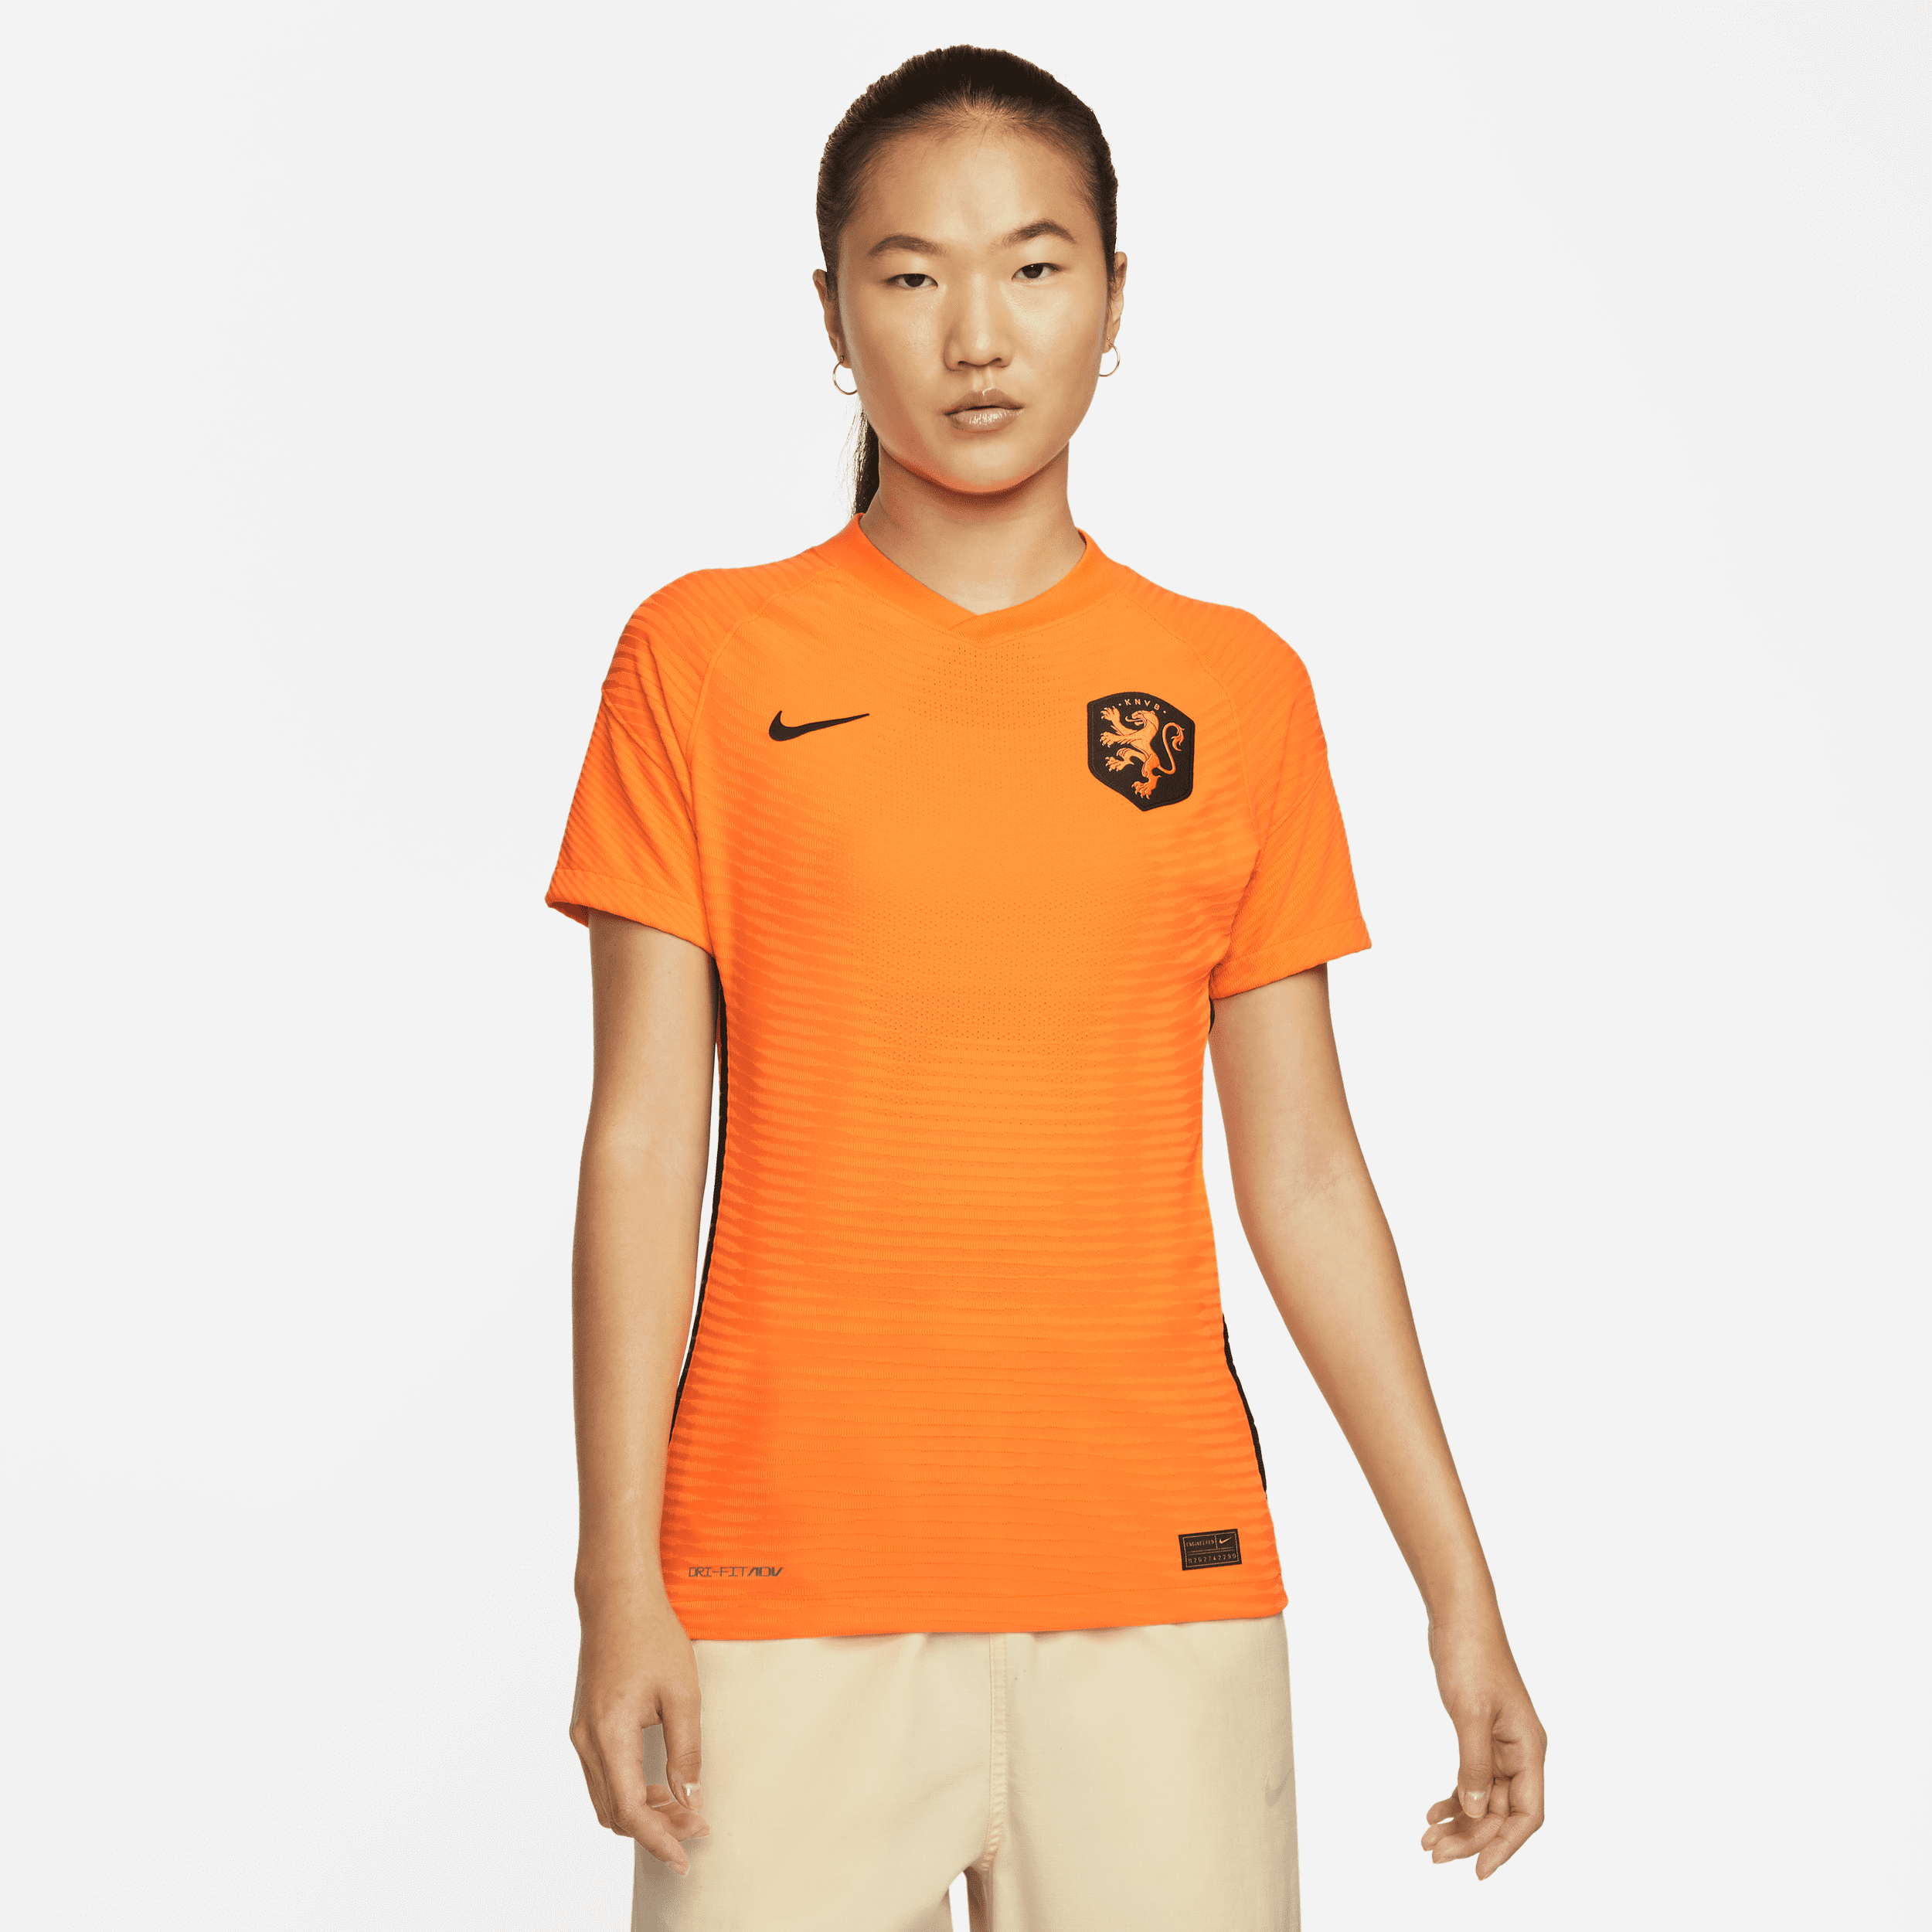 Netherlands National Team kit - FootballKit Eu